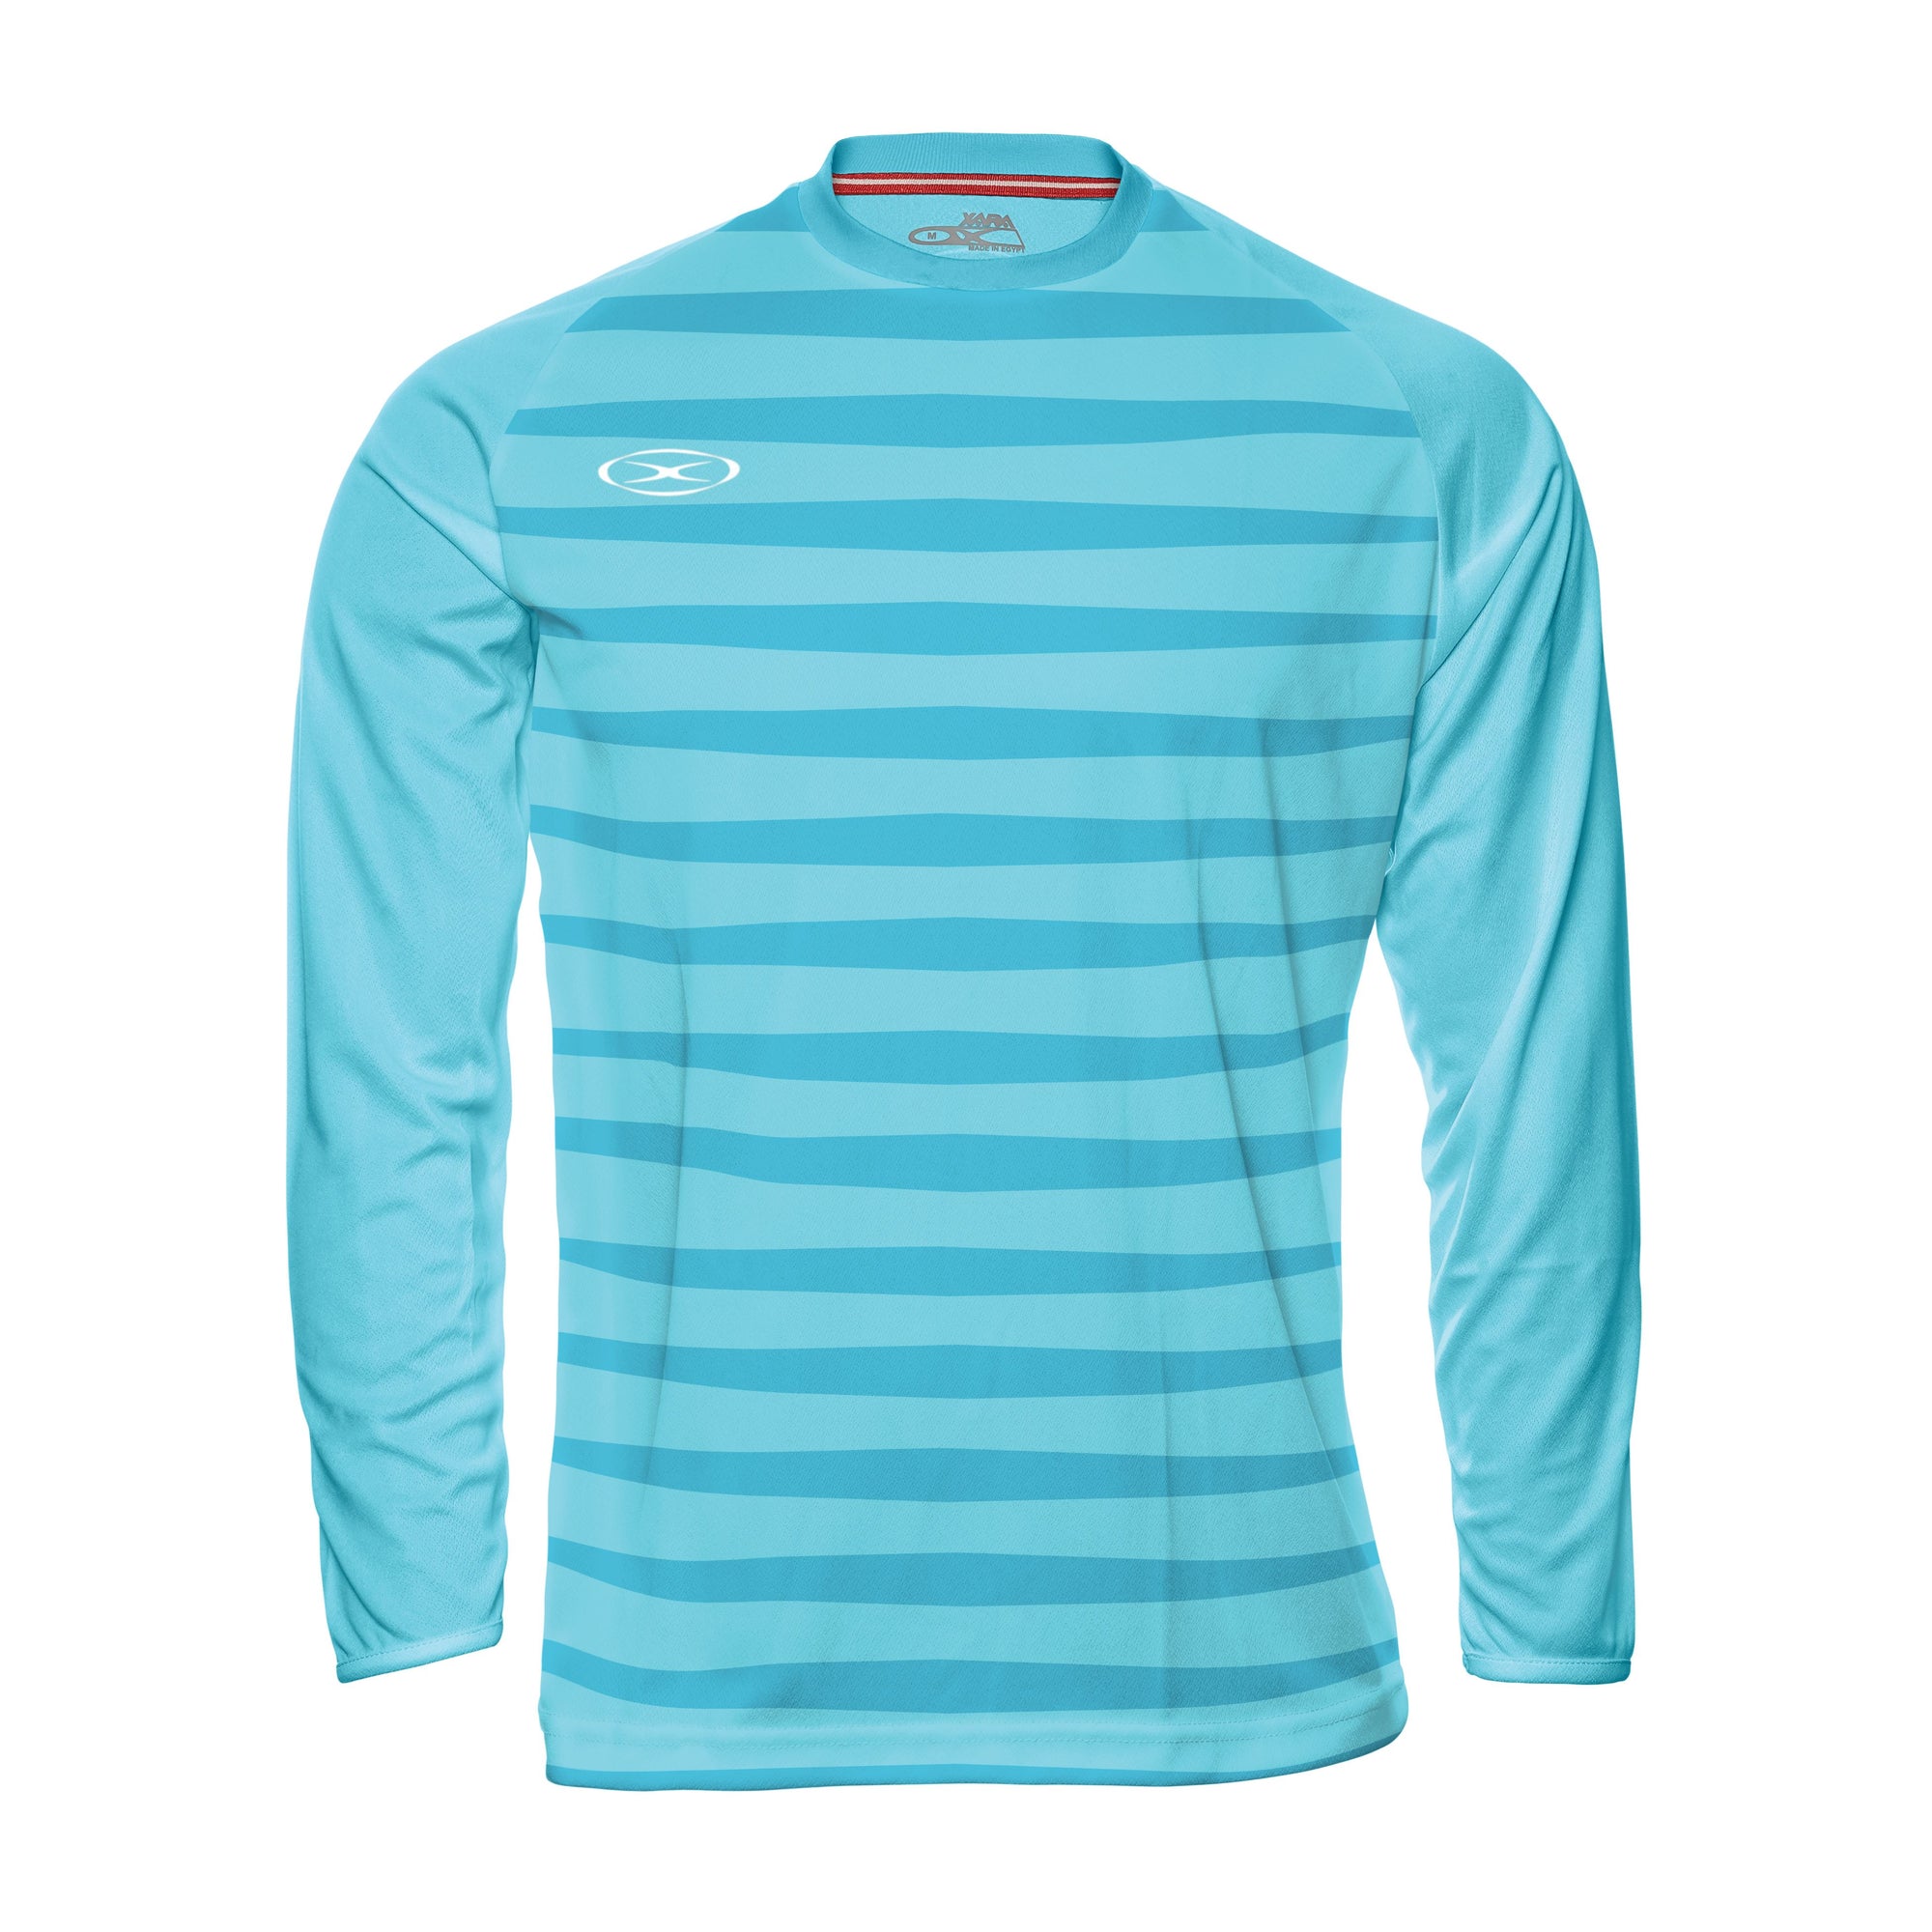 Hillford Goal Keeper Shirt - Unisex Shirt Xara Soccer Sky Youth Small 